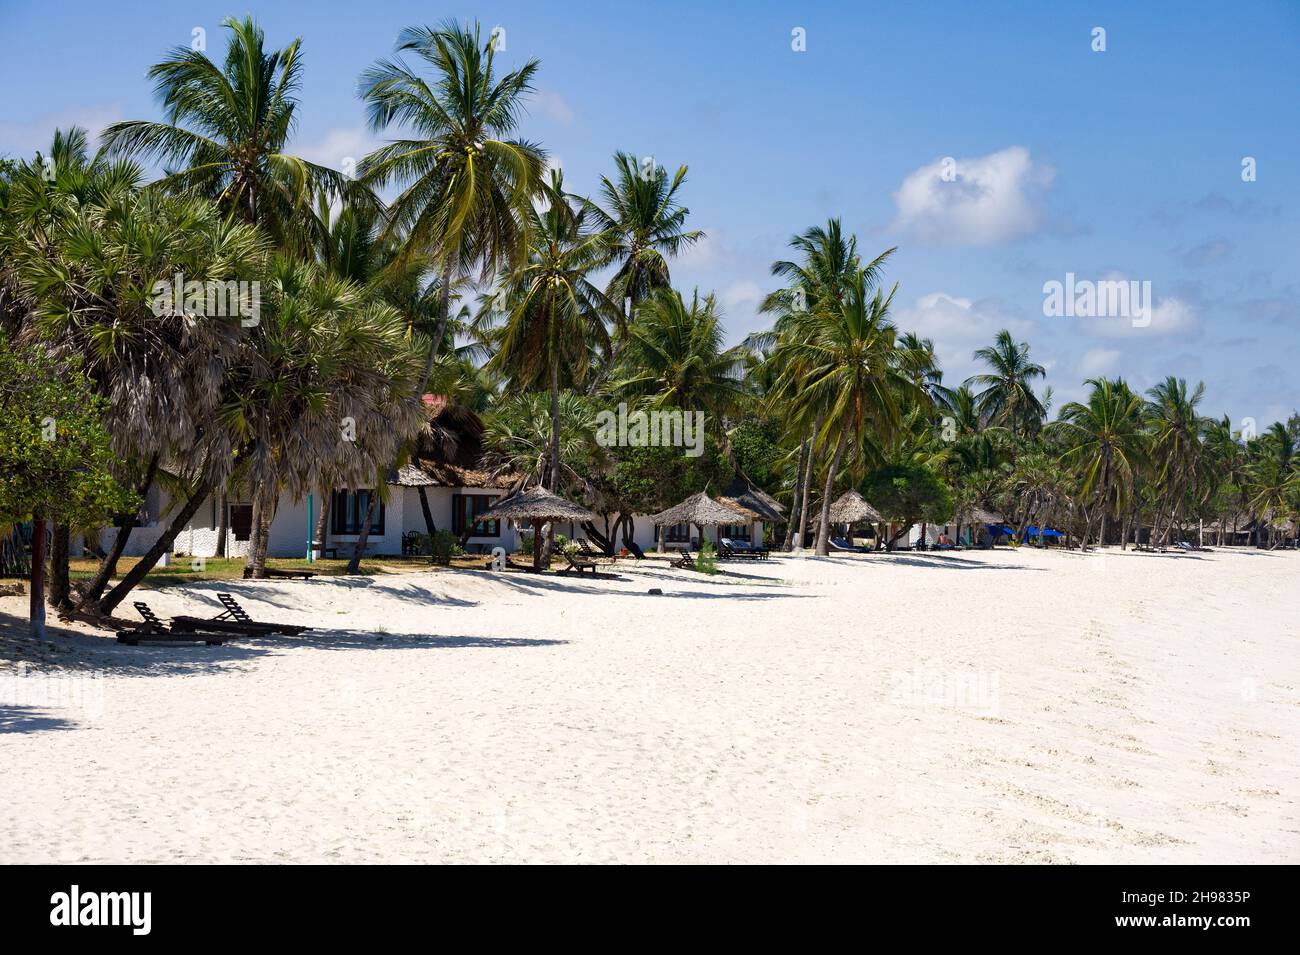 Beach chalets amongst palm tress by the beach on a sunny day, Diani, Kenya Stock Photo